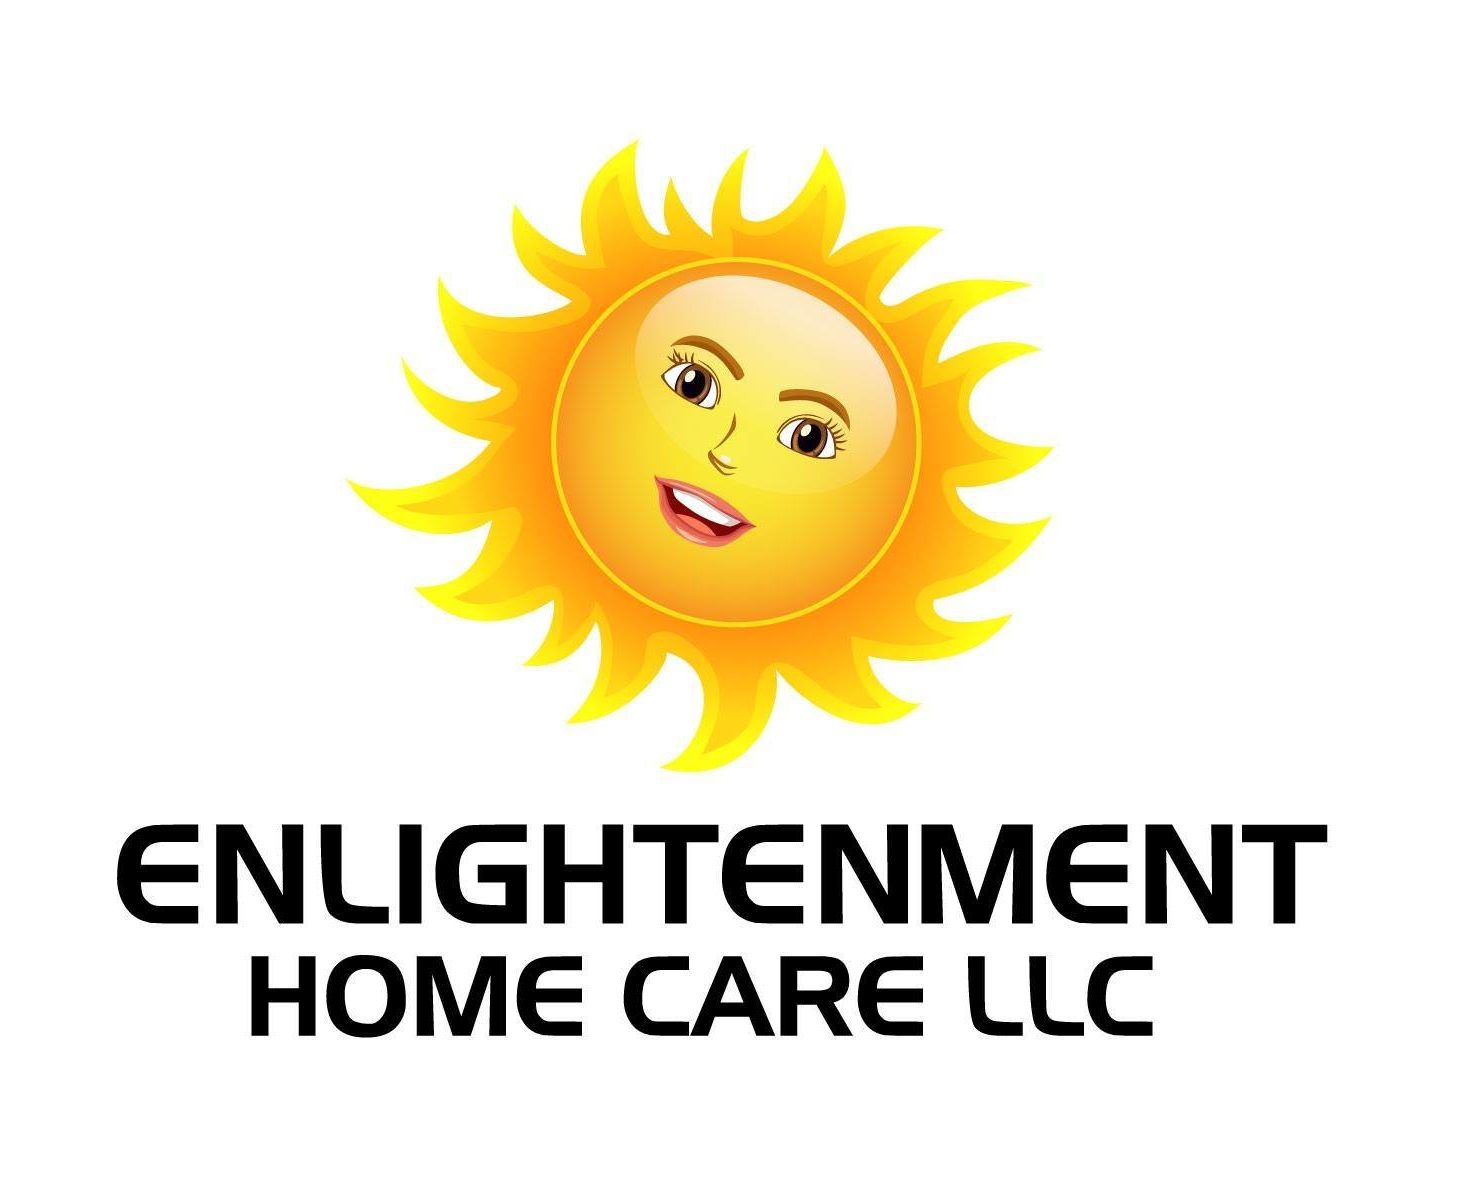 Enlight Home Care Llc